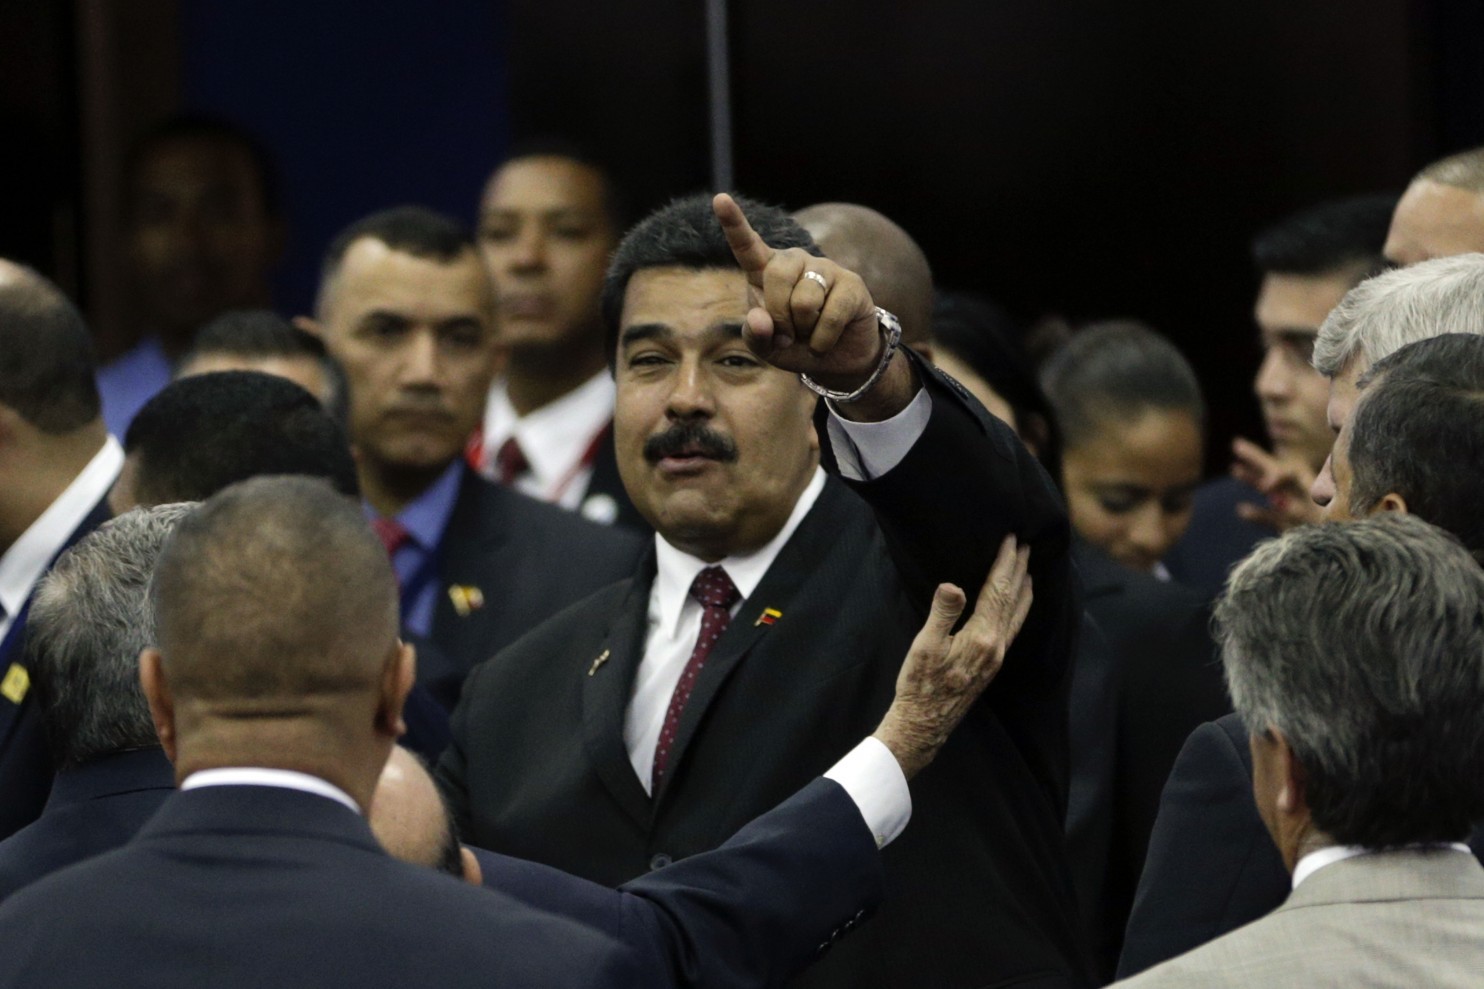 Obama, Venezuela’s Maduro Meet for First Time